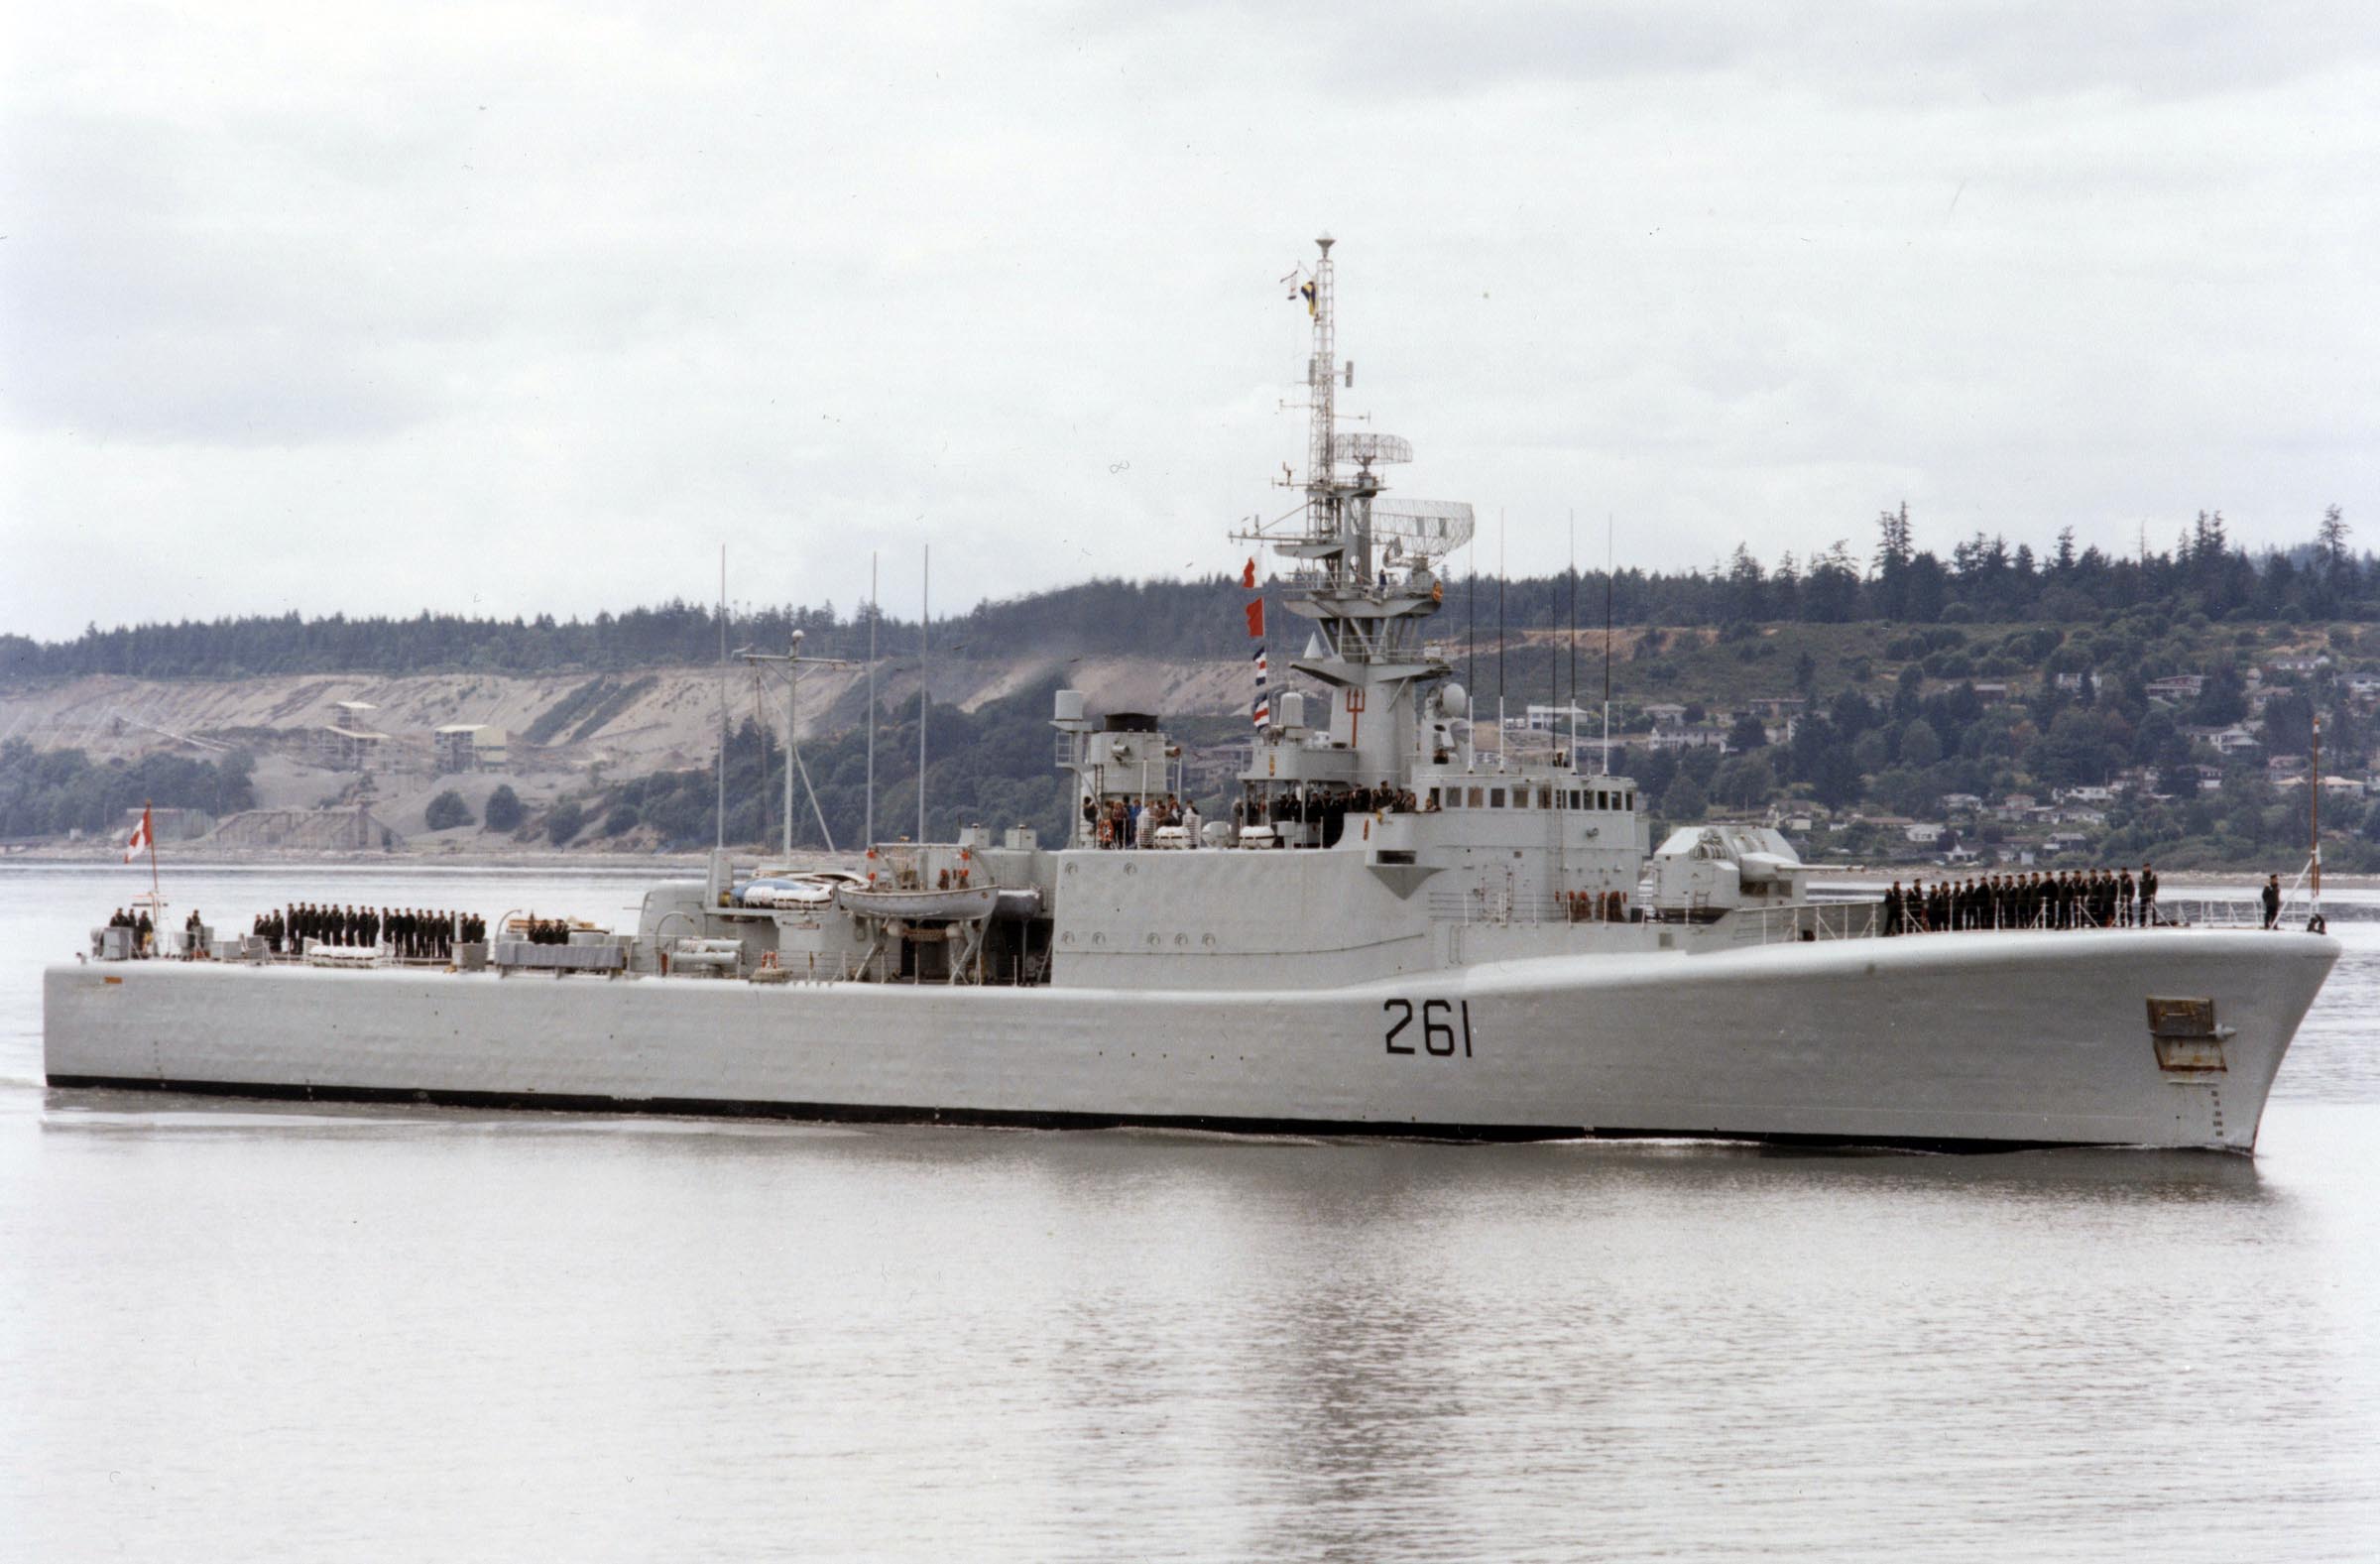 HMCS MACKENZIE in the Esquimalt Harbour approaches.